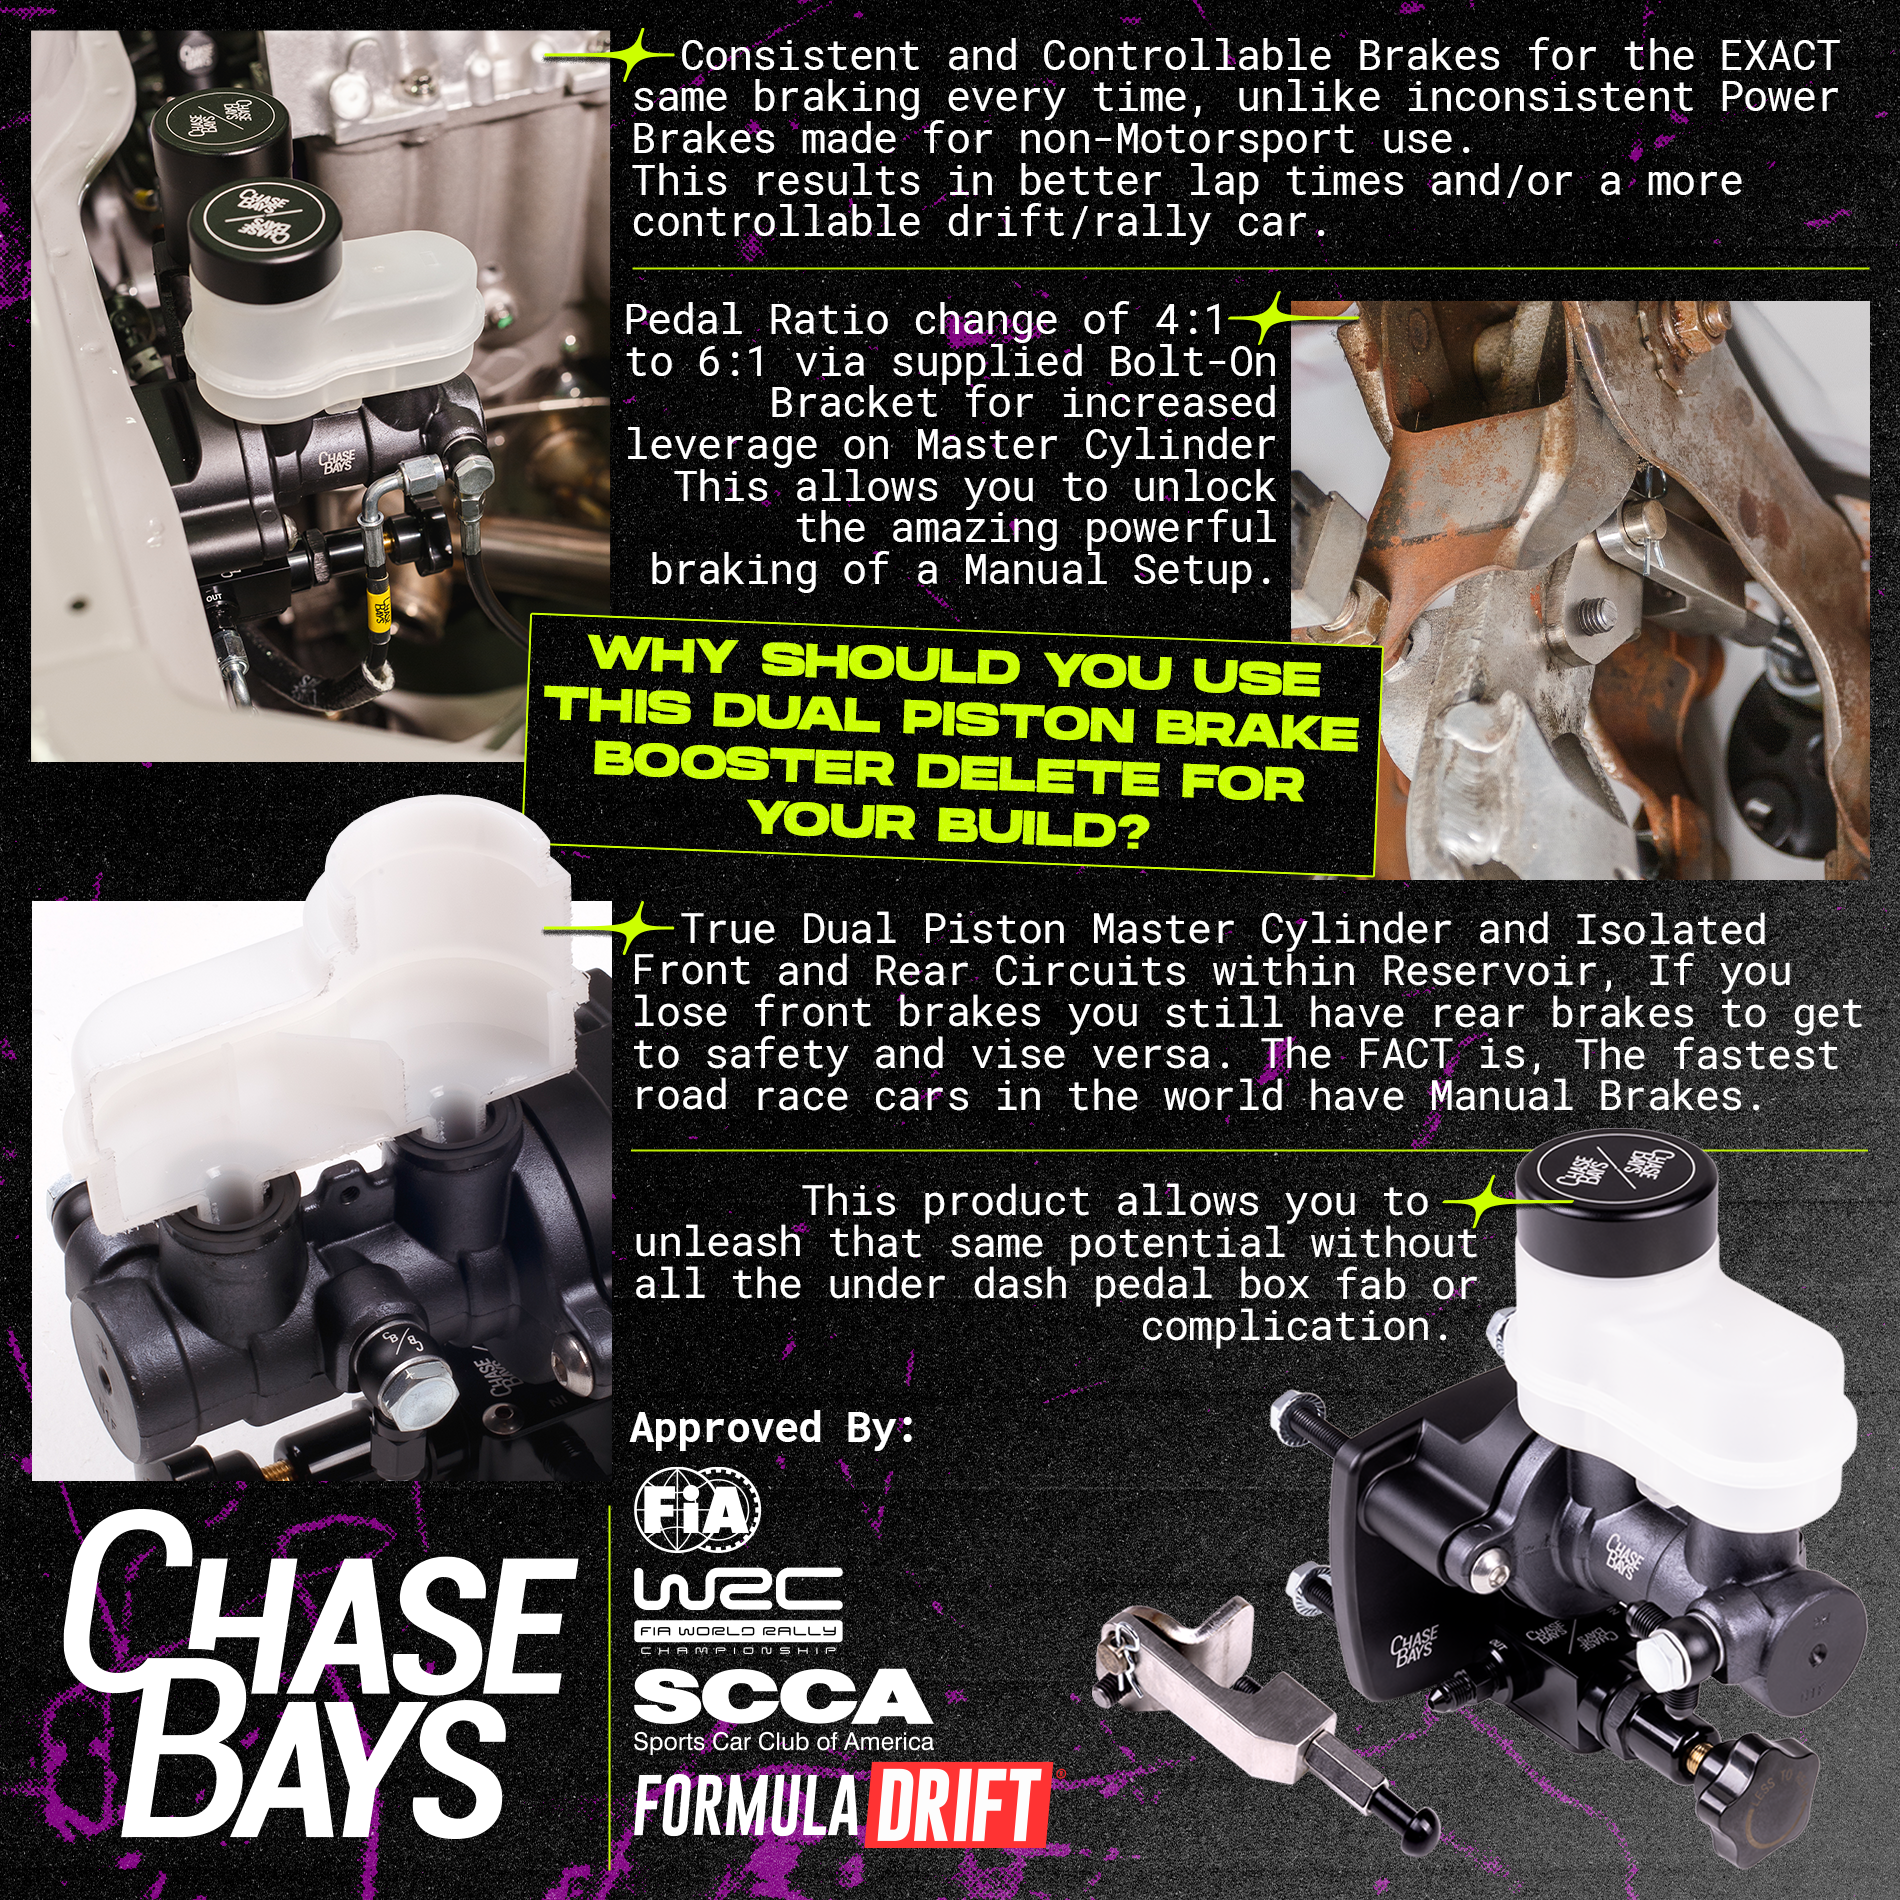 Chase Bays Doppelkolben-Bremskraftverstärker mit Bolt-On 6:1 Pedal Ratio